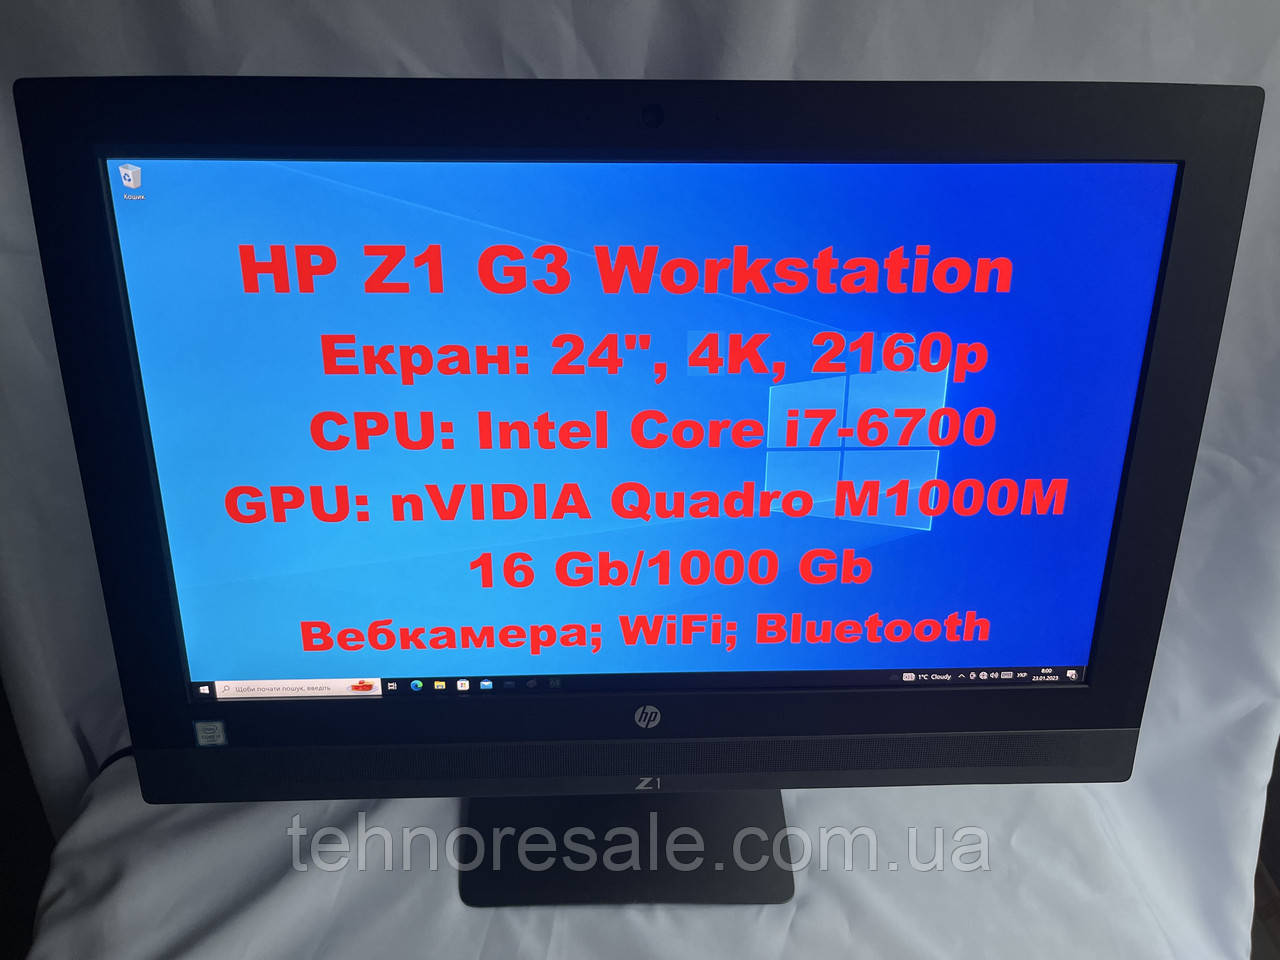 Моноблок HP Z1 G3, i7-6700, 16Gb, HDD 1000Gb, nVIDIA QUADRO M1000M, екран 4K IPS 24"